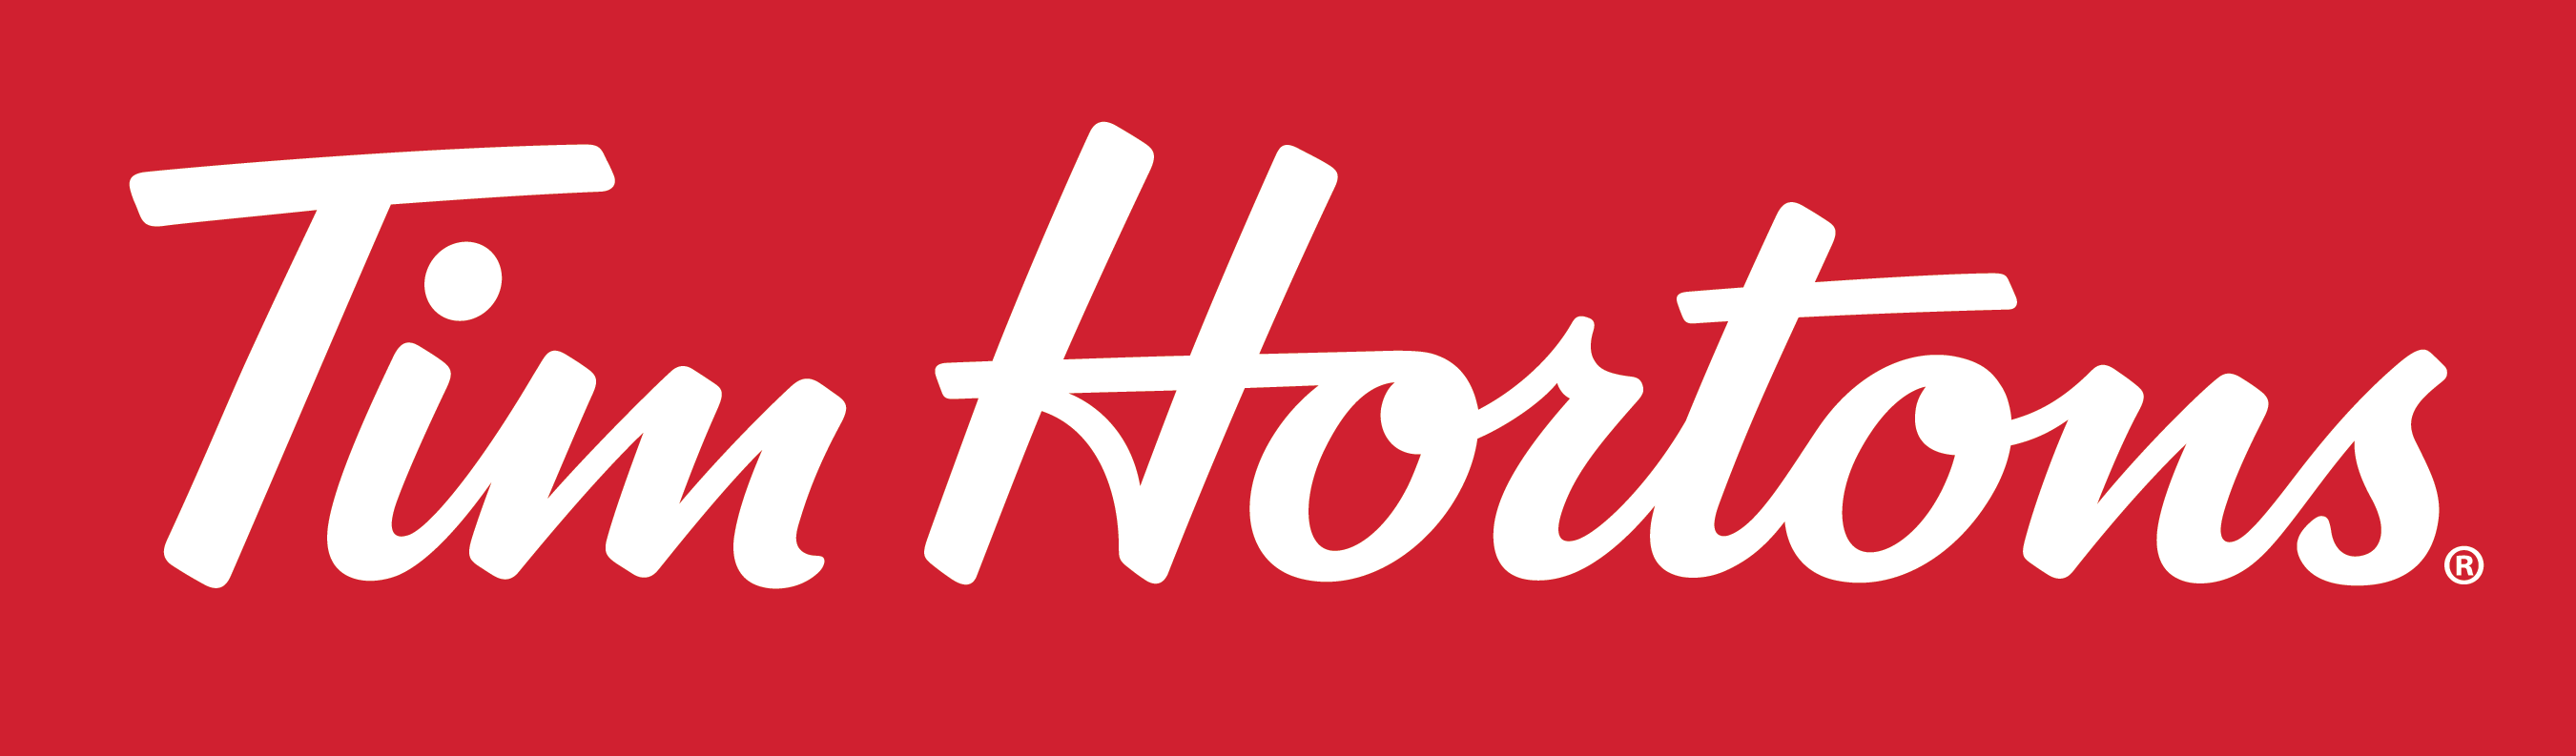 Brand: Tim Horton's